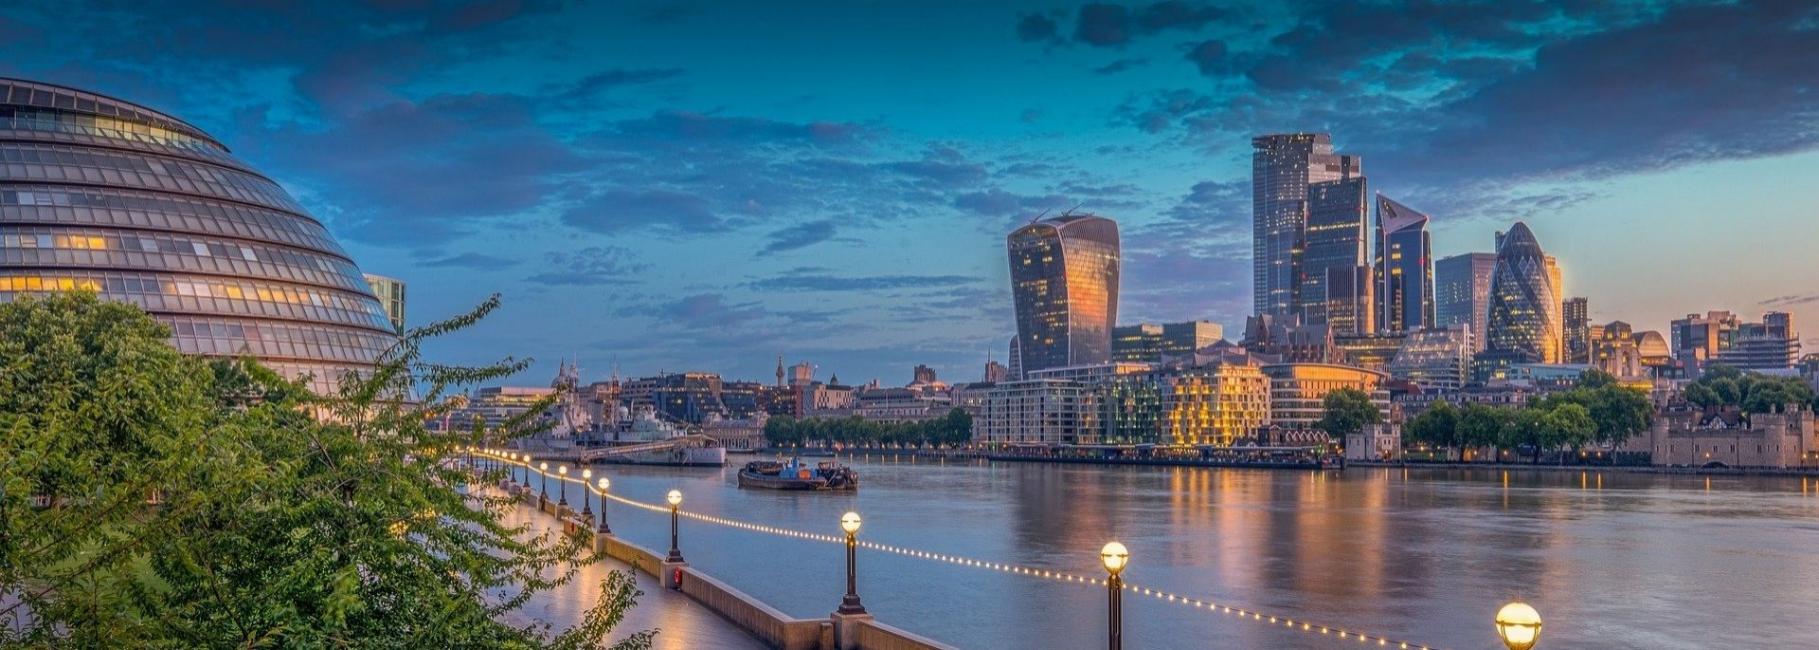 london economics trip header slk fe